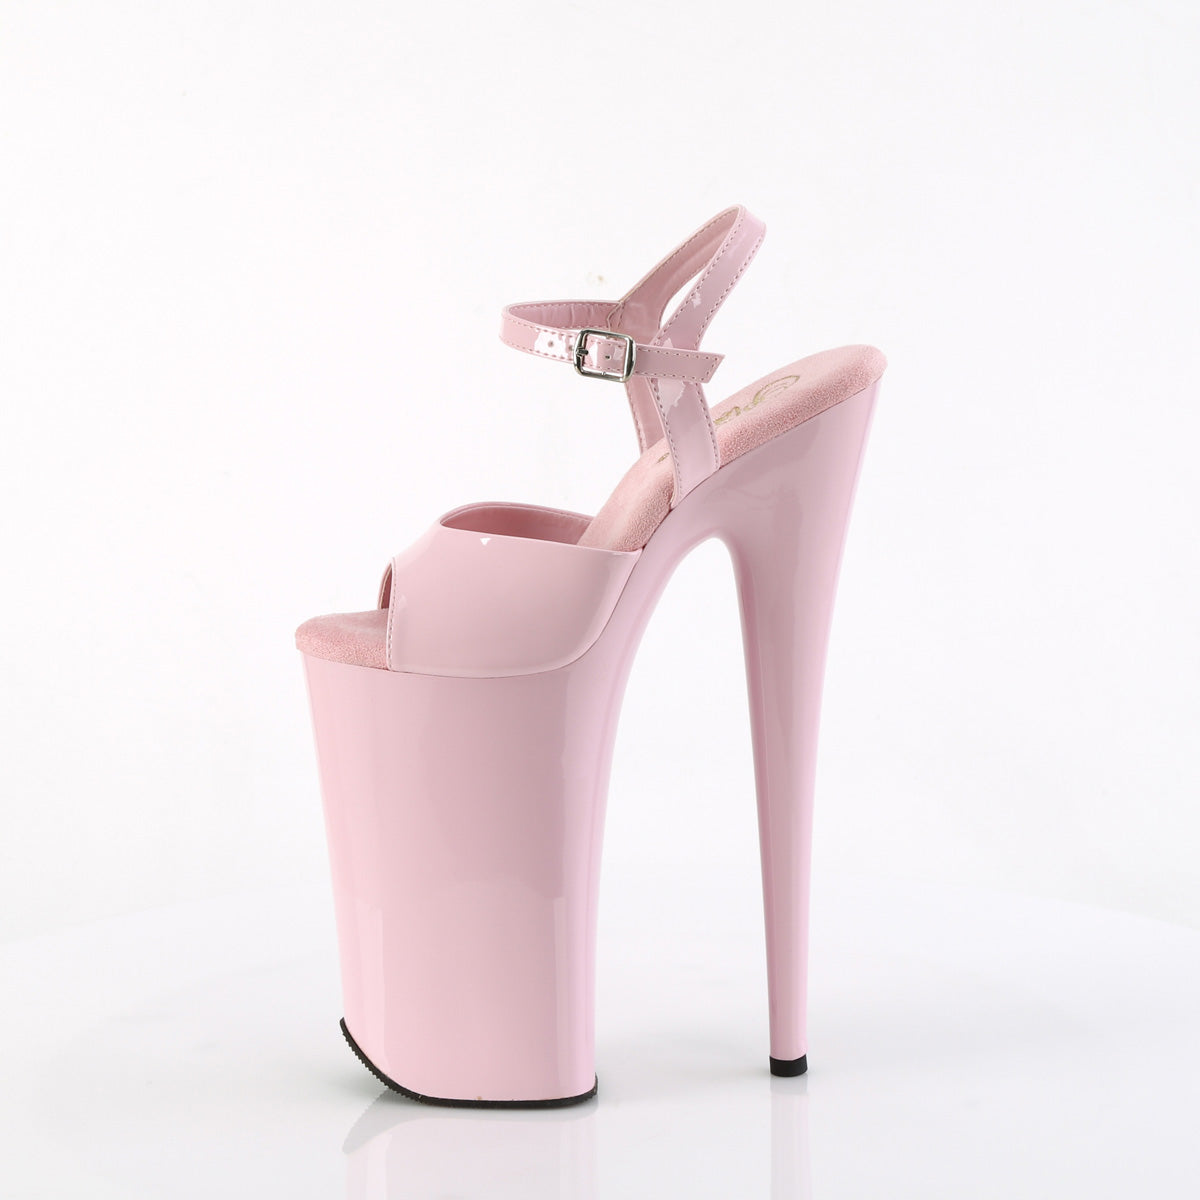 BEYOND-009 Pleaser B Pink Patent/B Pink Platform Shoes [Extreme High Heels]